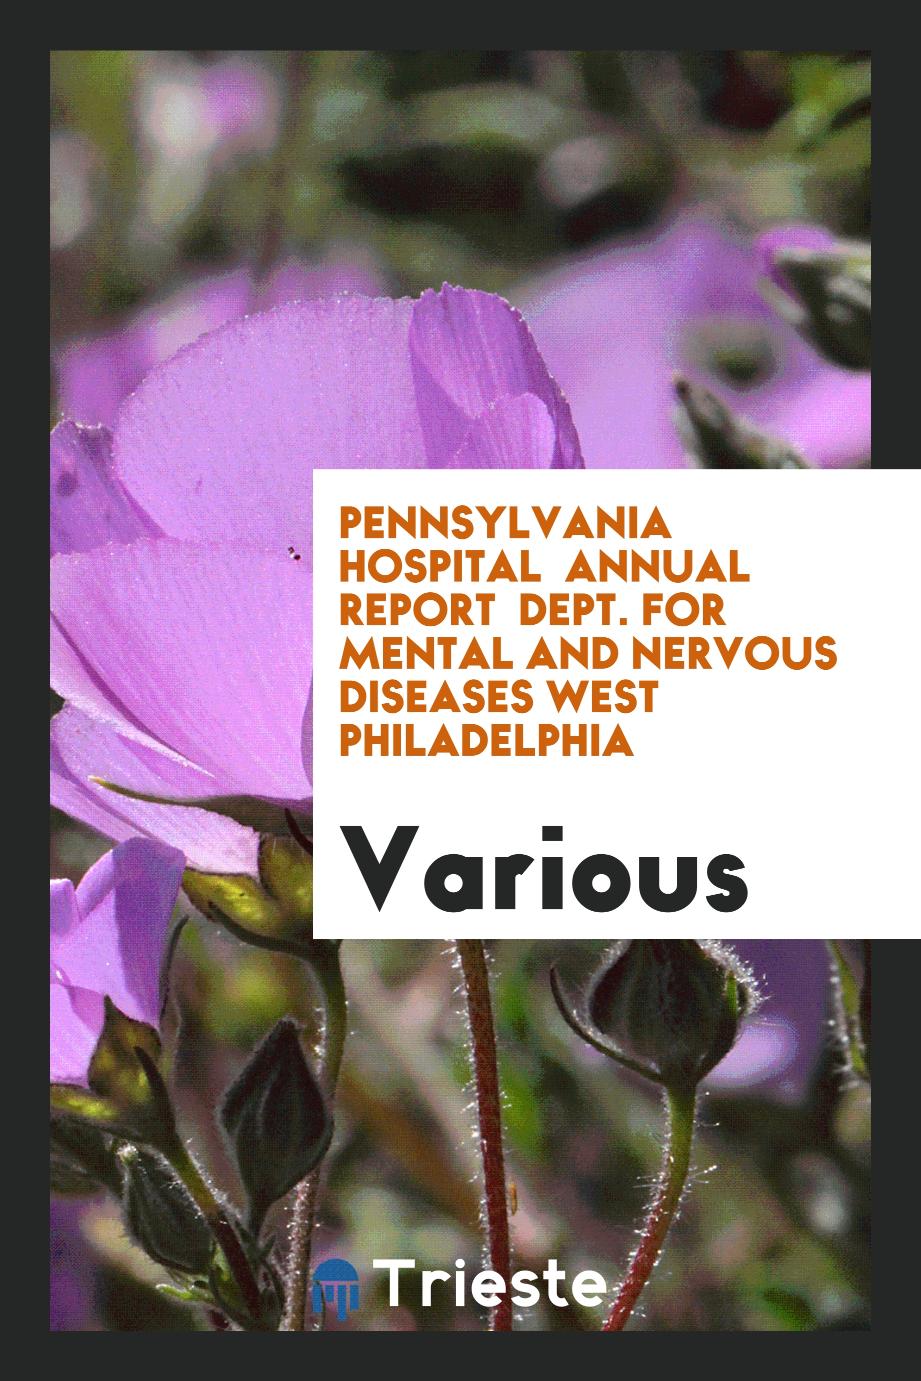 Pennsylvania Hospital Annual Report Dept. for Mental and Nervous Diseases West Philadelphia